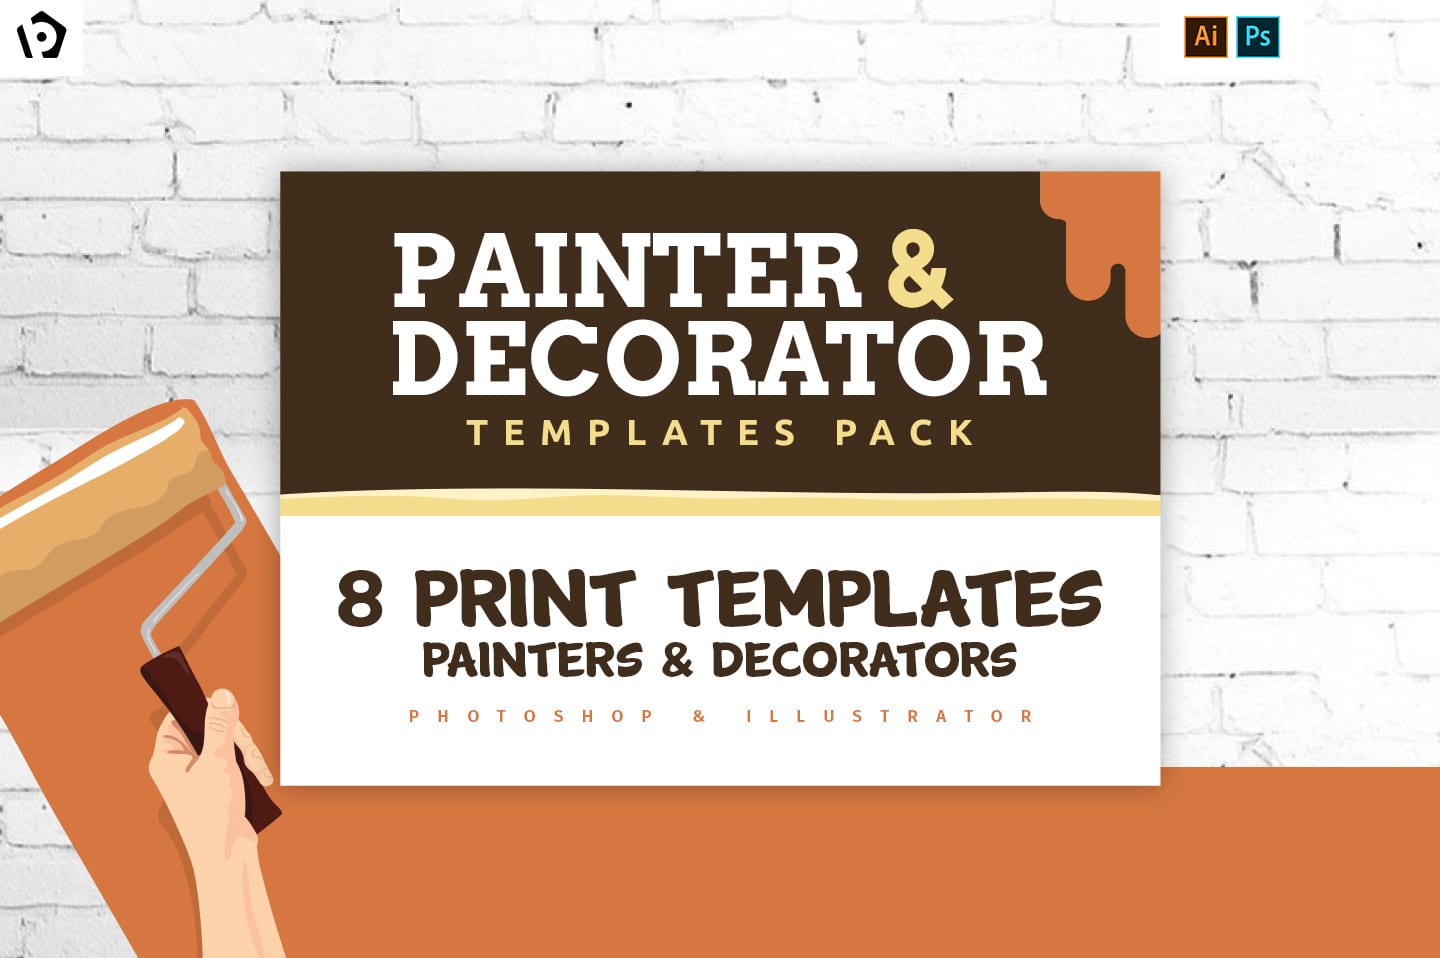 Painter & Decorator Templates Pack for Photoshop & Illustrator